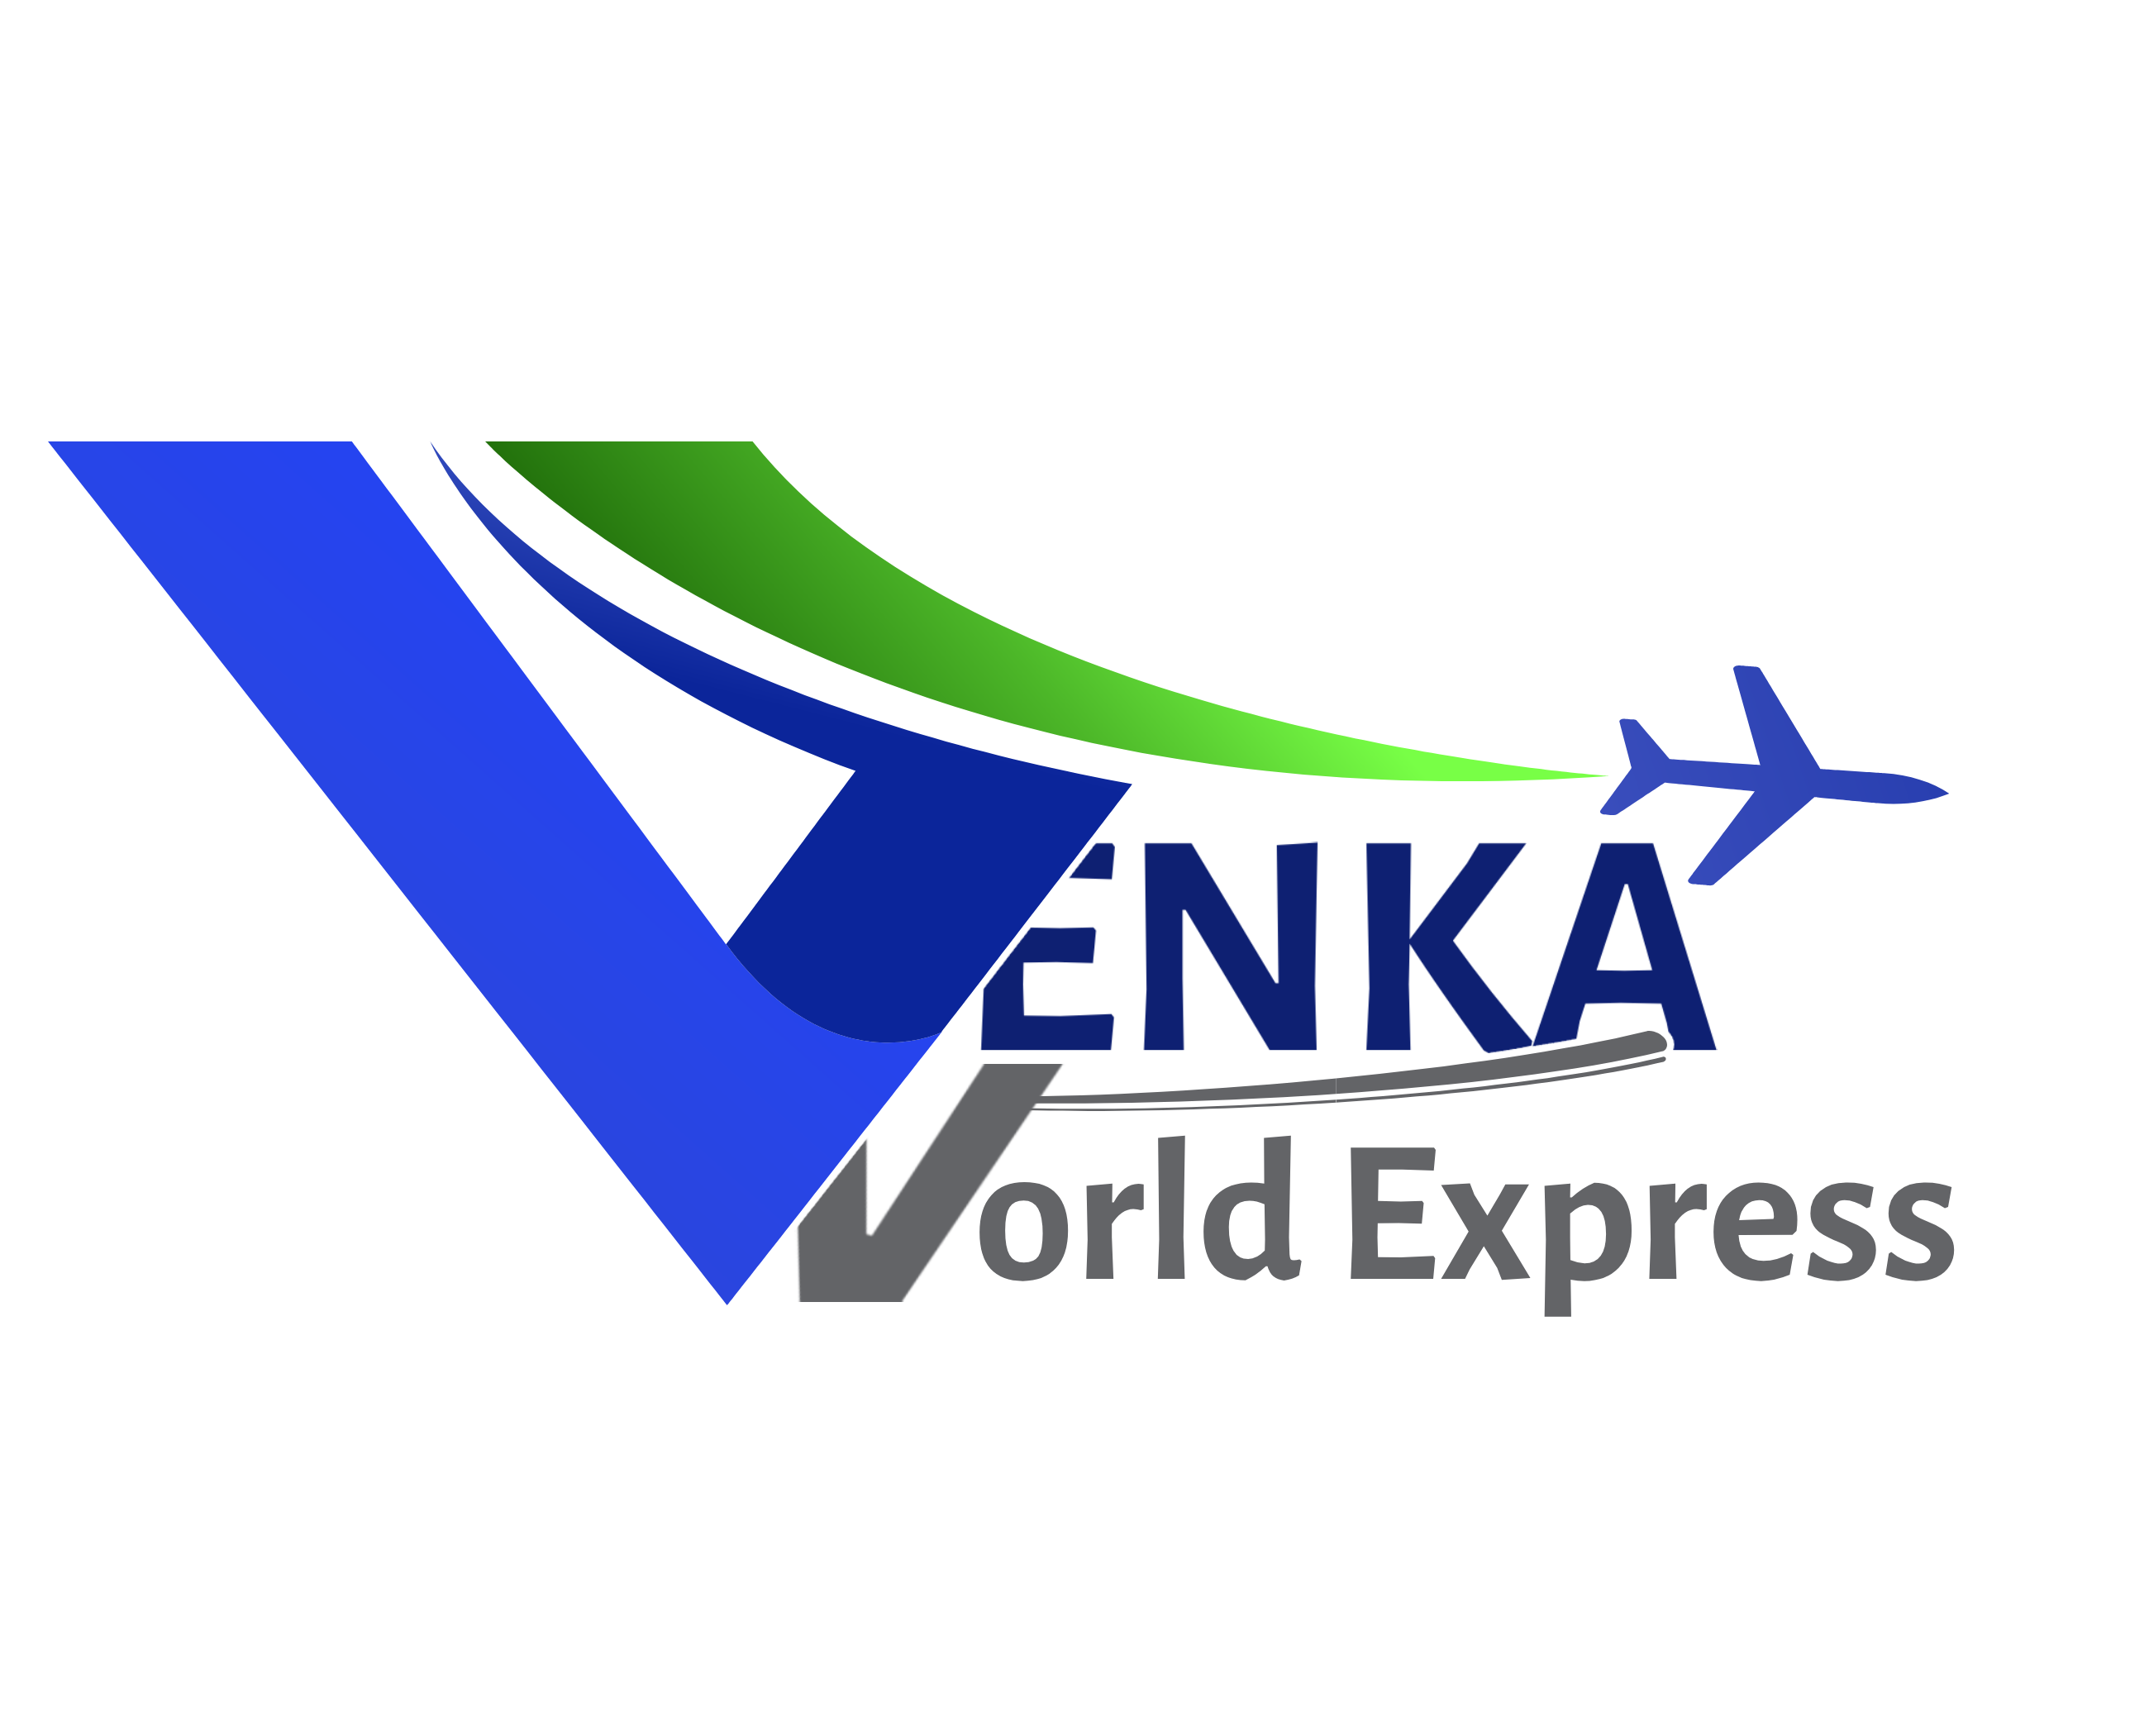 VENKA WORLD EXPRESS